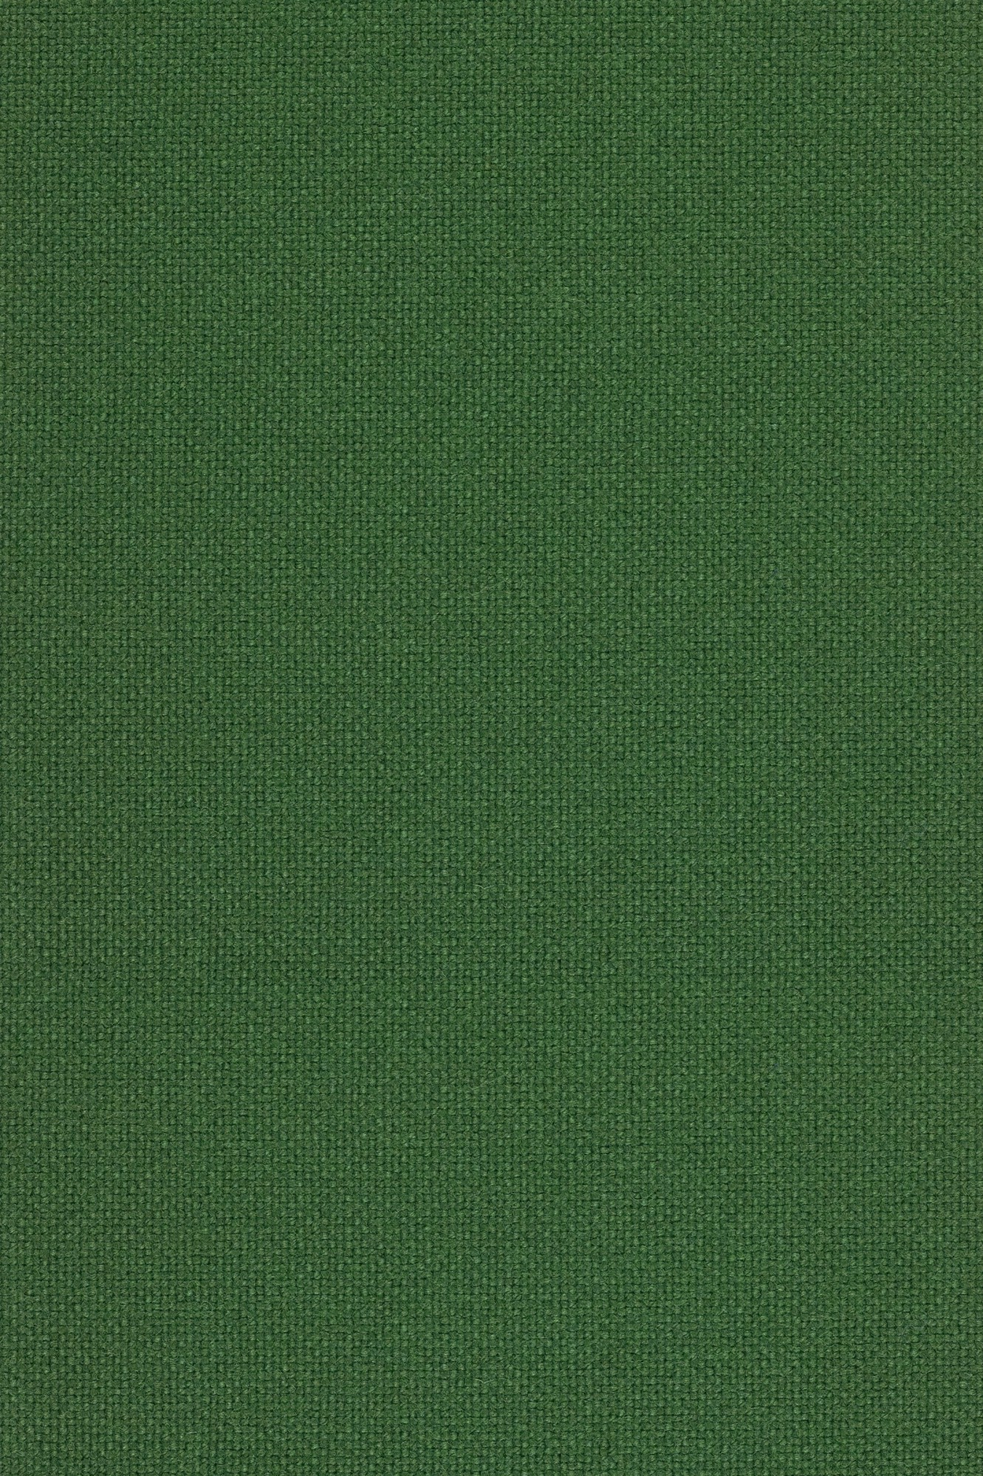 Fabric sample Hallingdal 65 944 green